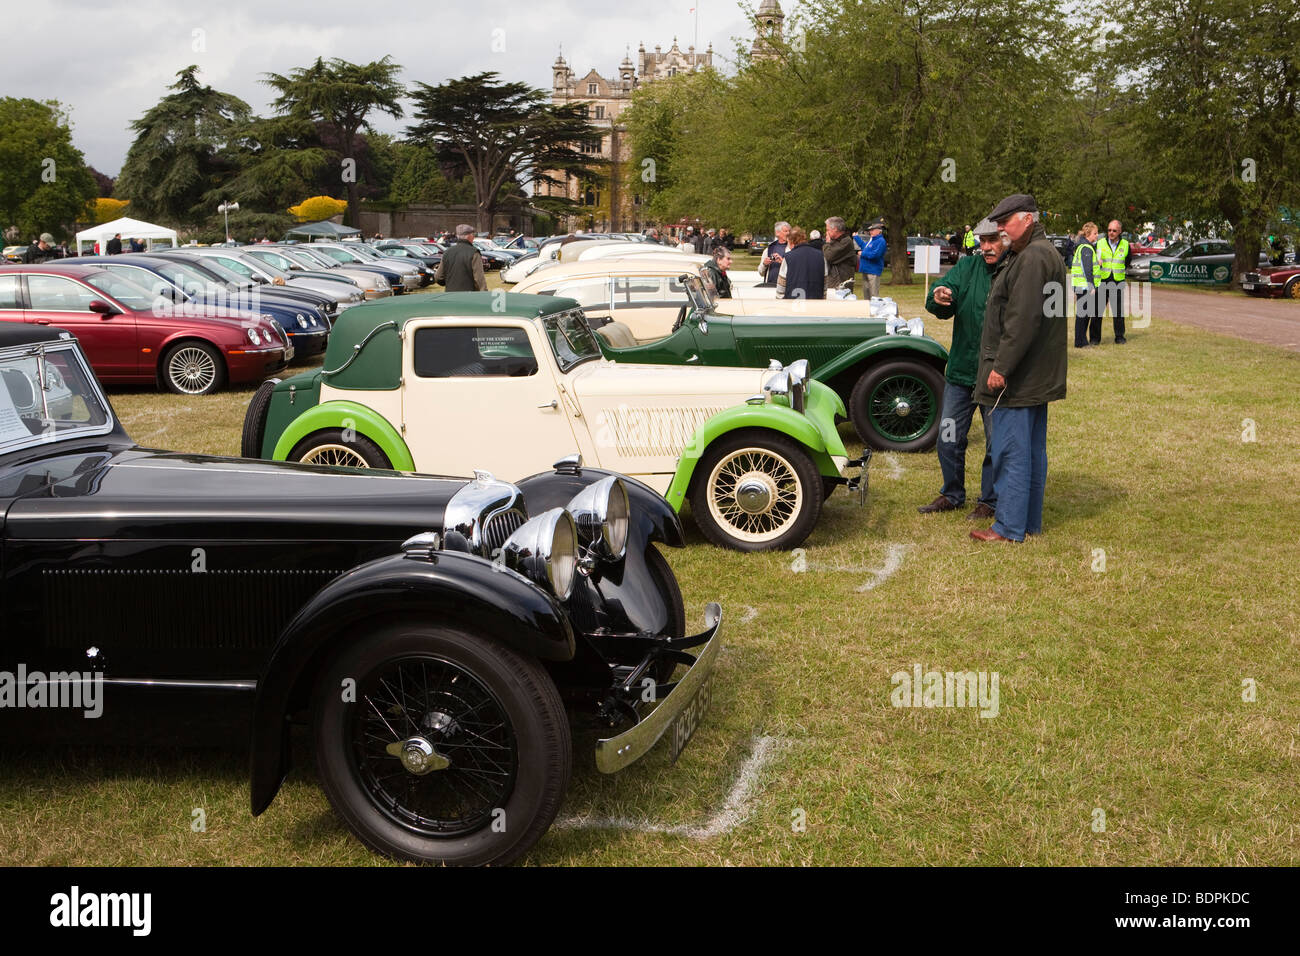 Autofahren, Jaguar Enthusiasts Club 25. Jahrestag Rallye Thoresby Hall Park, Nottinghamshire, SS schlucken Fahrzeuge Stockfoto